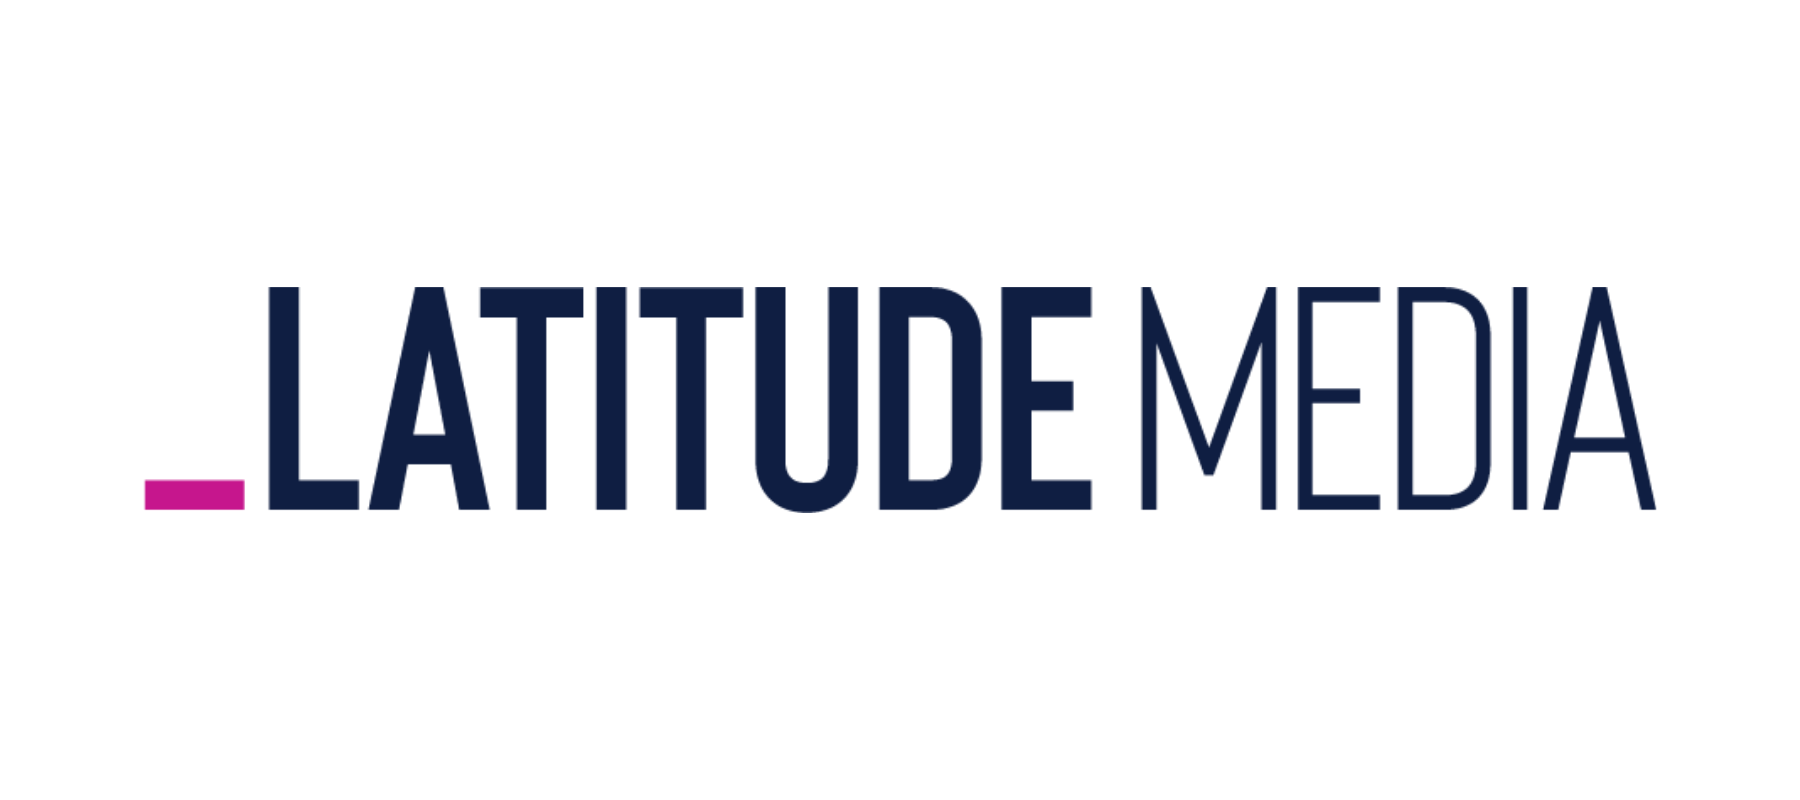 Post Script Media announces expansion and rebrand to Latitude Media